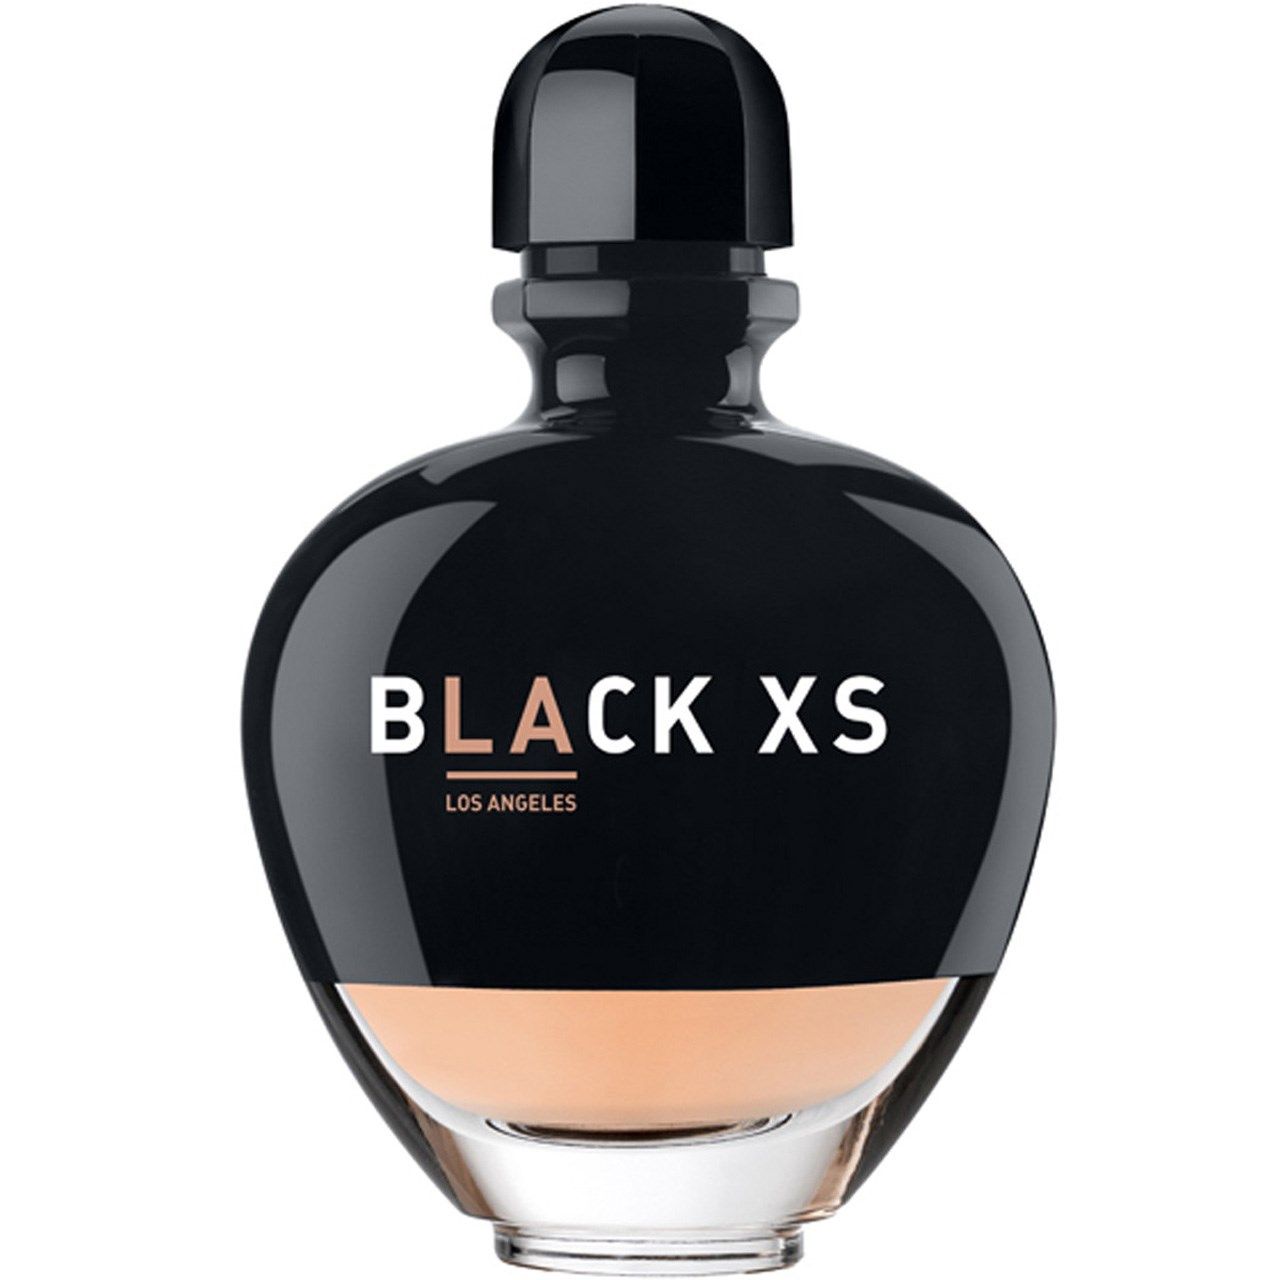 ادو تویلت زنانه پاکو رابان مدل Black XS Los Angeles for Her حجم 80 میلی لیتر -  - 1